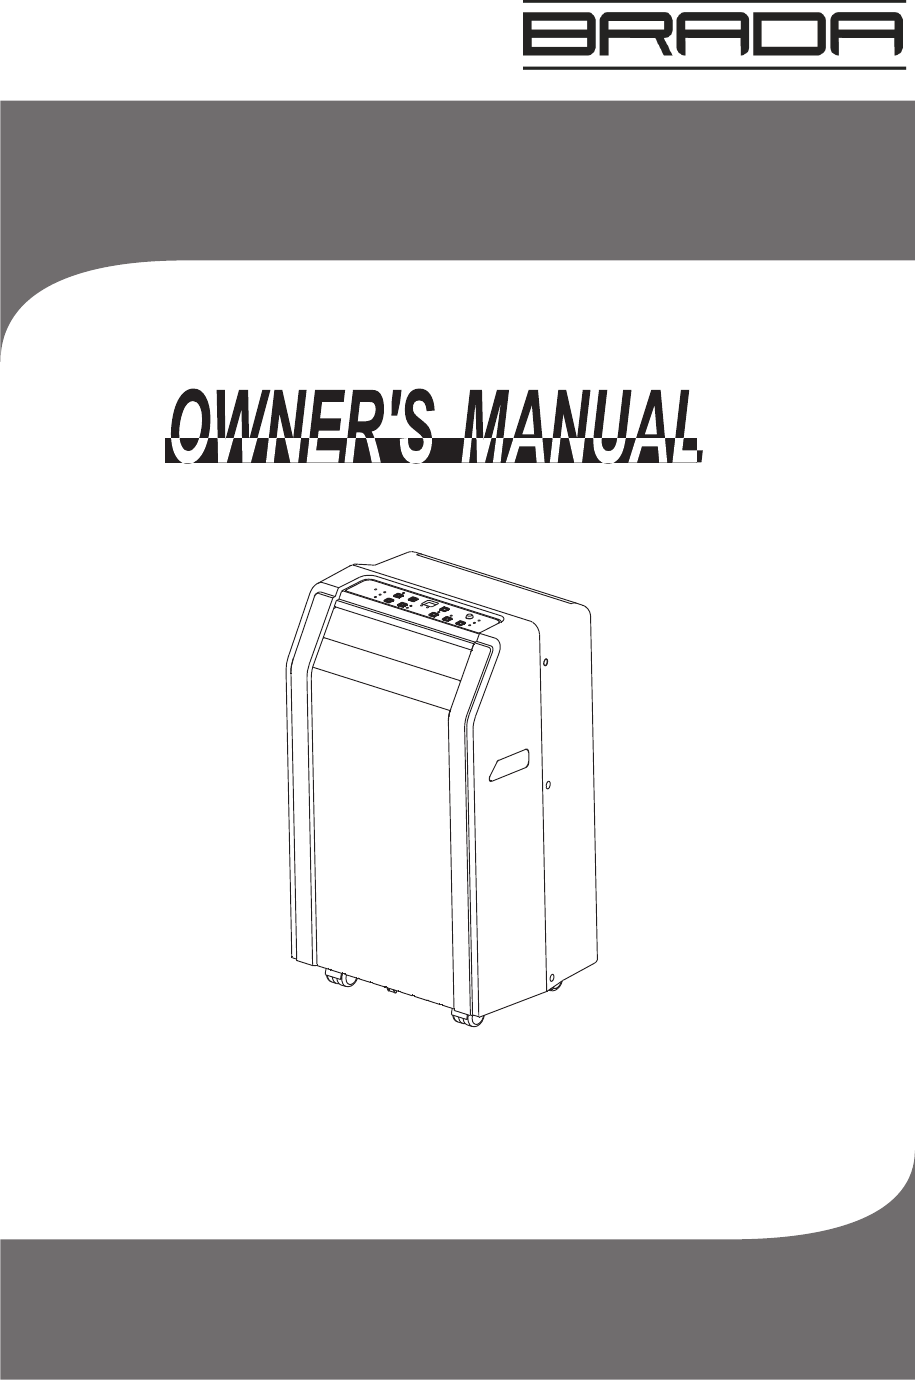 Brada dishwasher manual